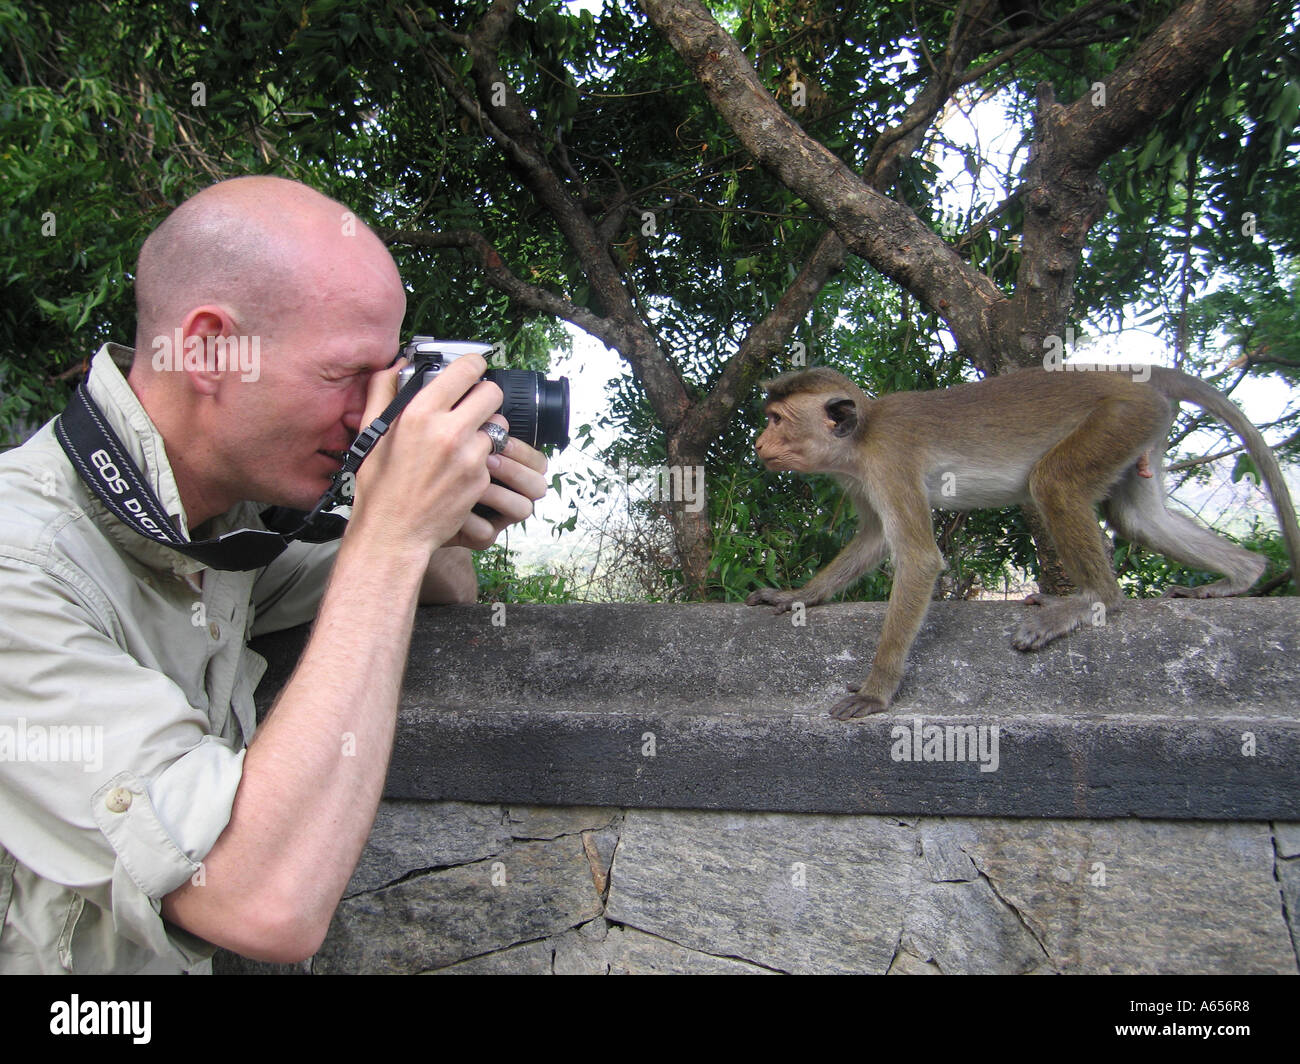 Sri Lanka Temple Monkey at Buddhist Dambulla Cave, Toque Monkey, Macaque  Monkey looking into the camera Stock Photo